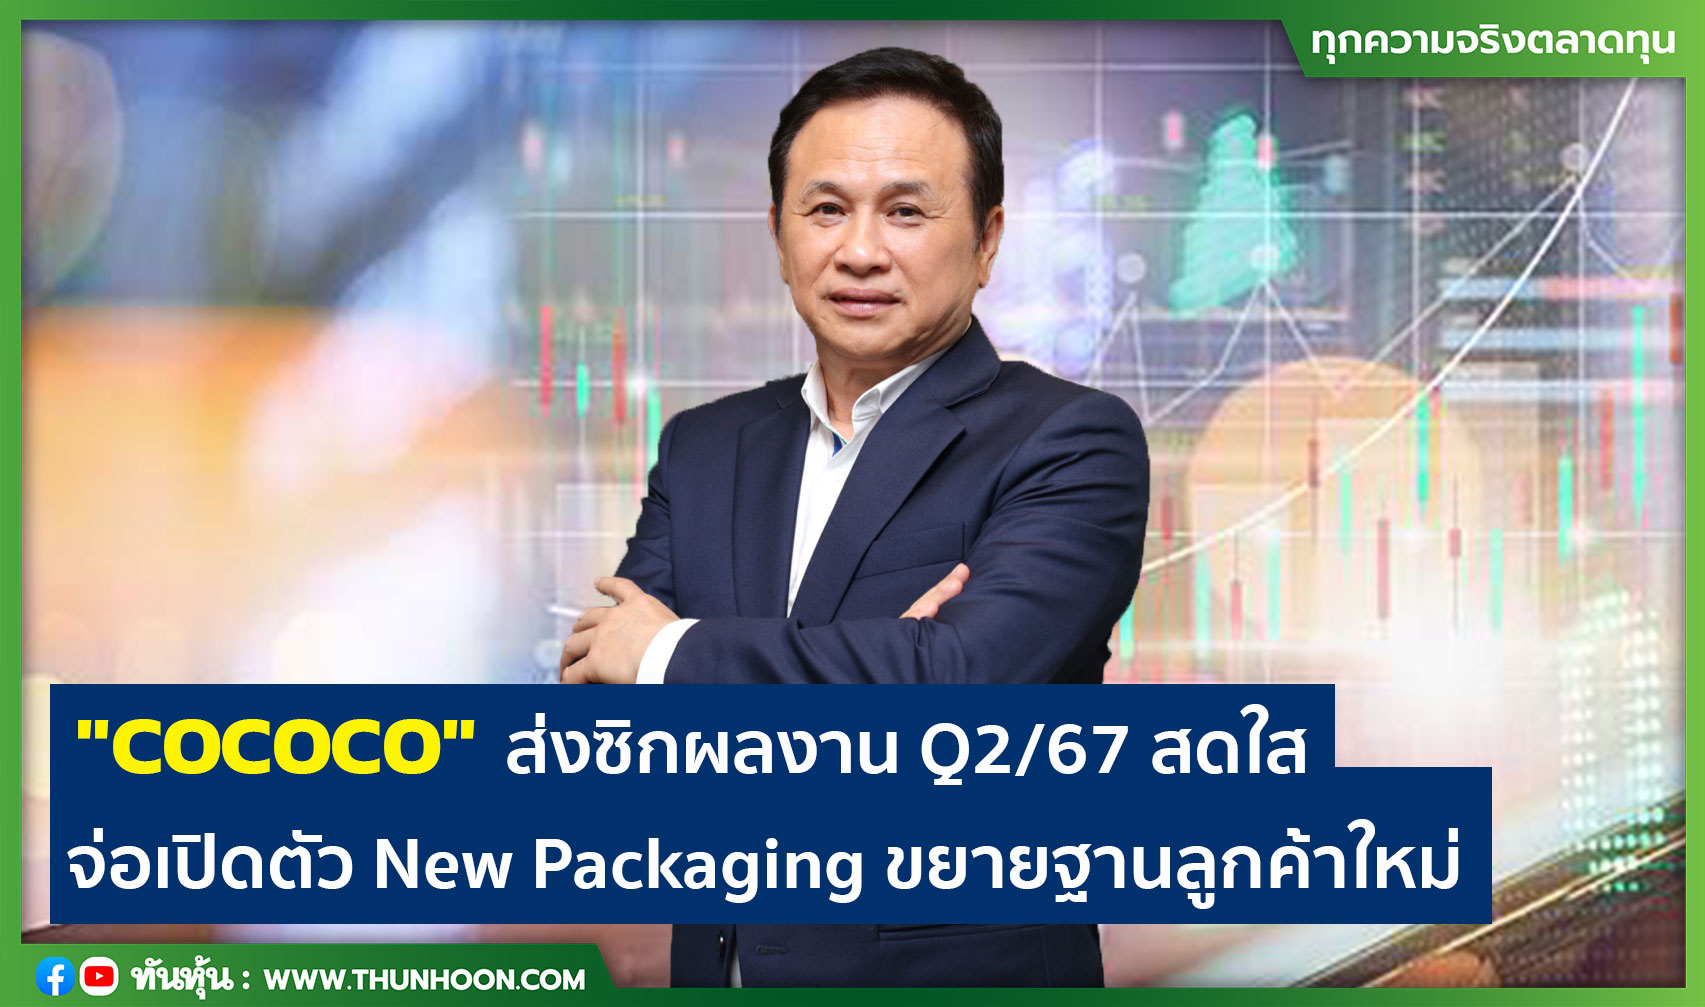 "COCOCO" ส่งซิก Q2/67 สดใส จ่อเปิดตัว New Packaging ขยายฐานลูกค้าใหม่